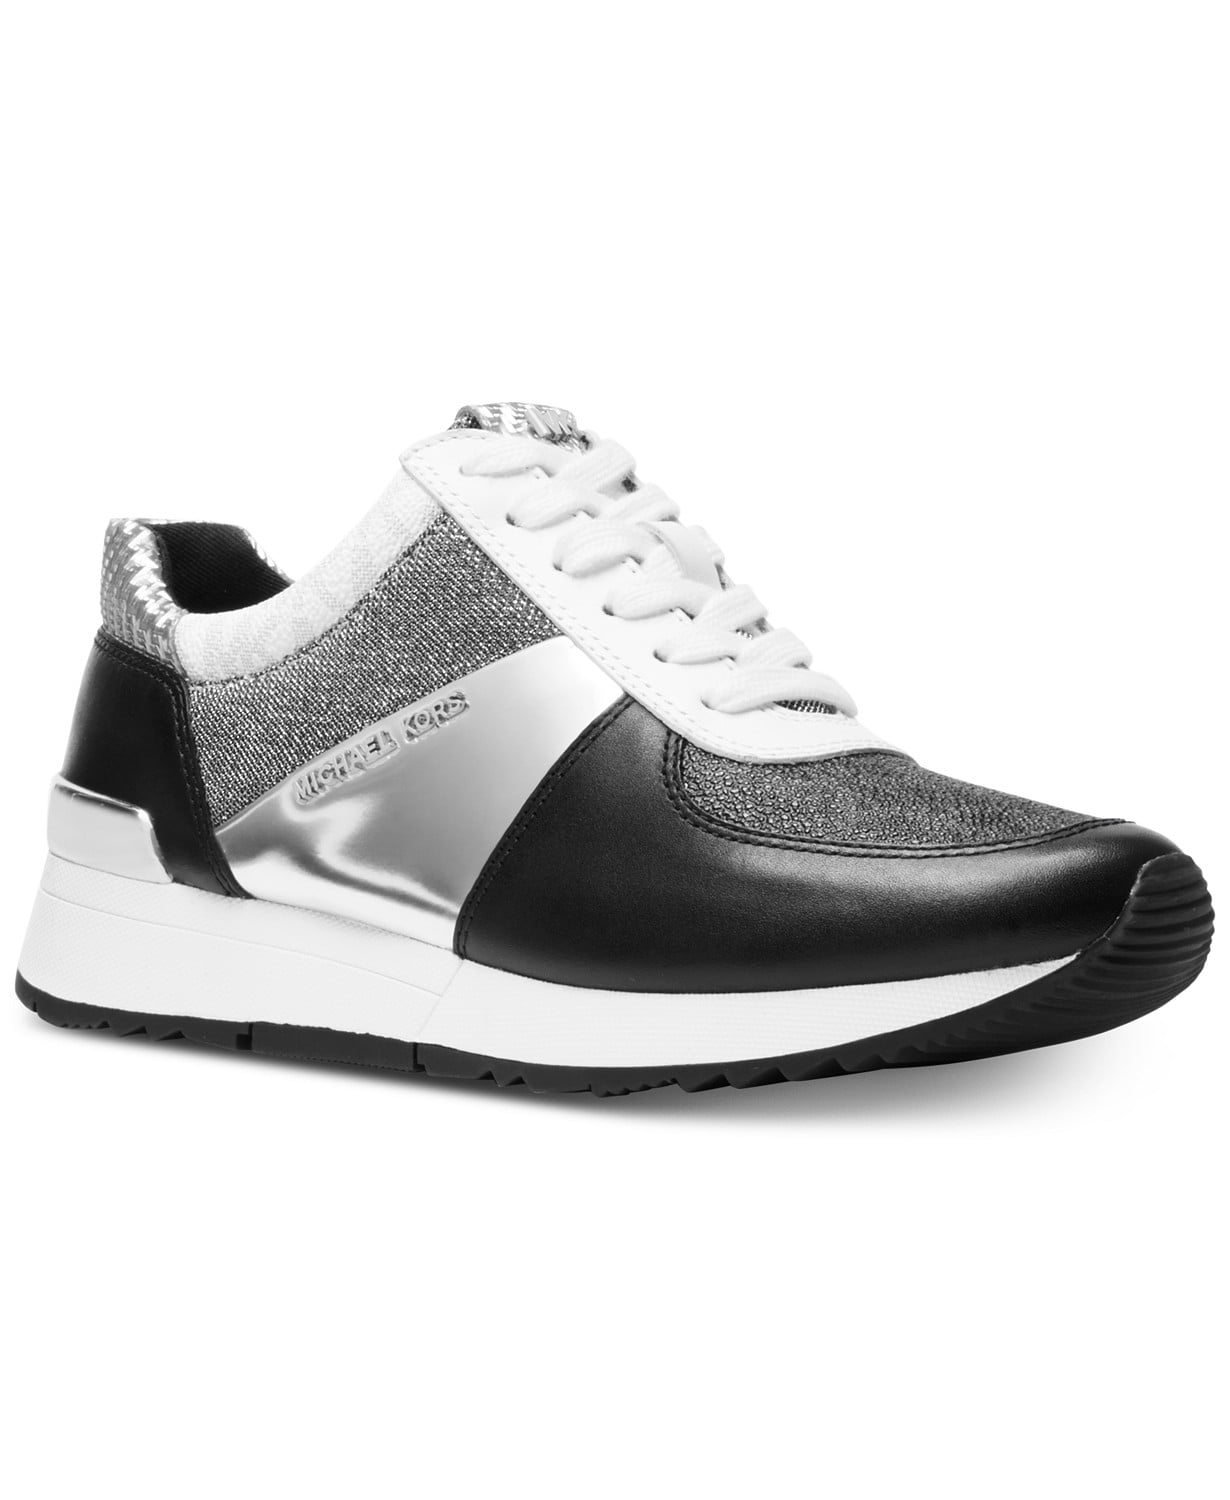 small Playground equipment combat Michael Kors Women's Allie Trainer Leather Metallic Sneakers Shoes Black  Silver (7.5) - Walmart.com